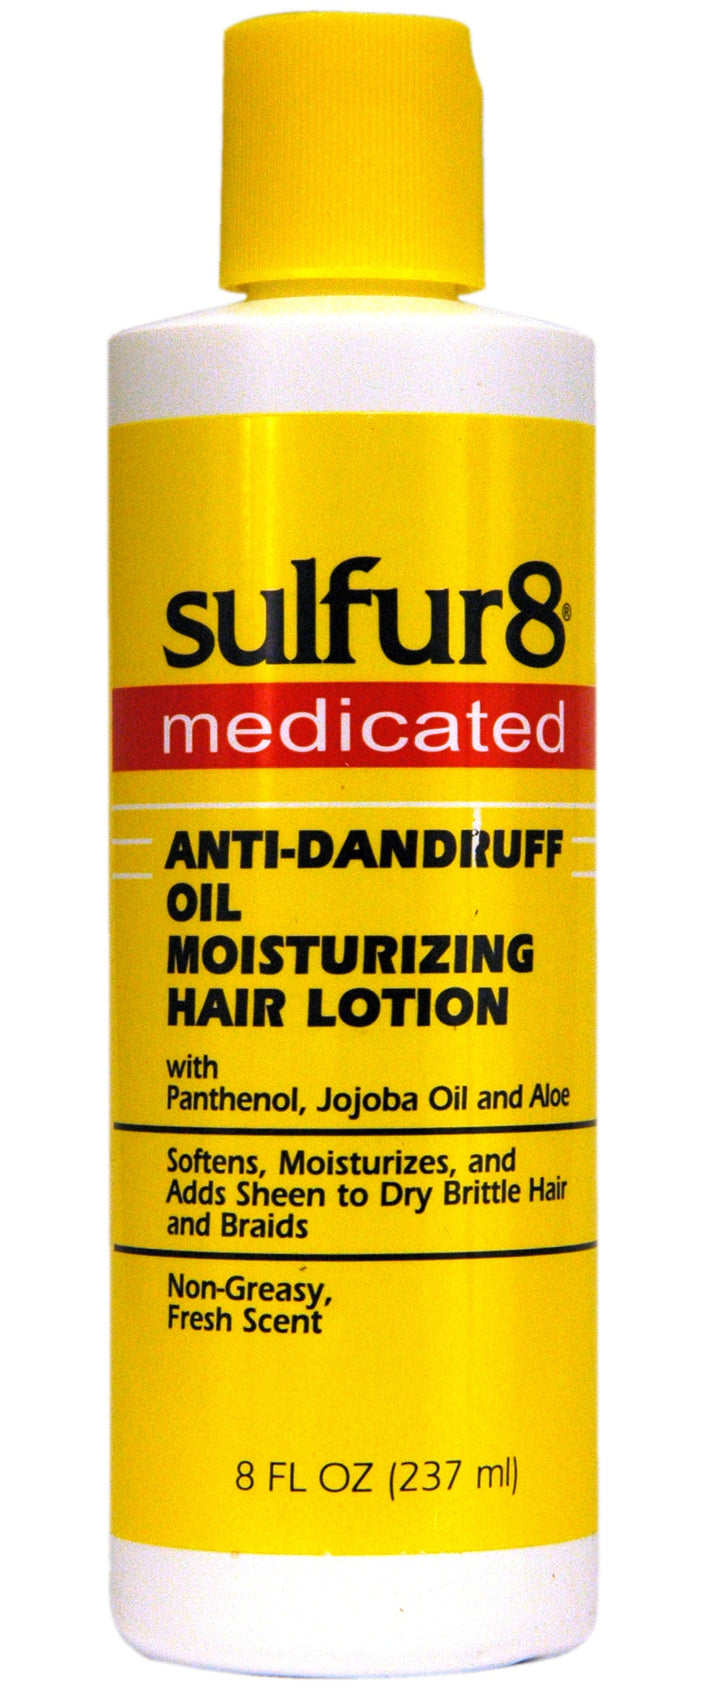 Sulfur8 Anti-Dandruff oil Moisturizing Hair Lotion. 8oz/237ml